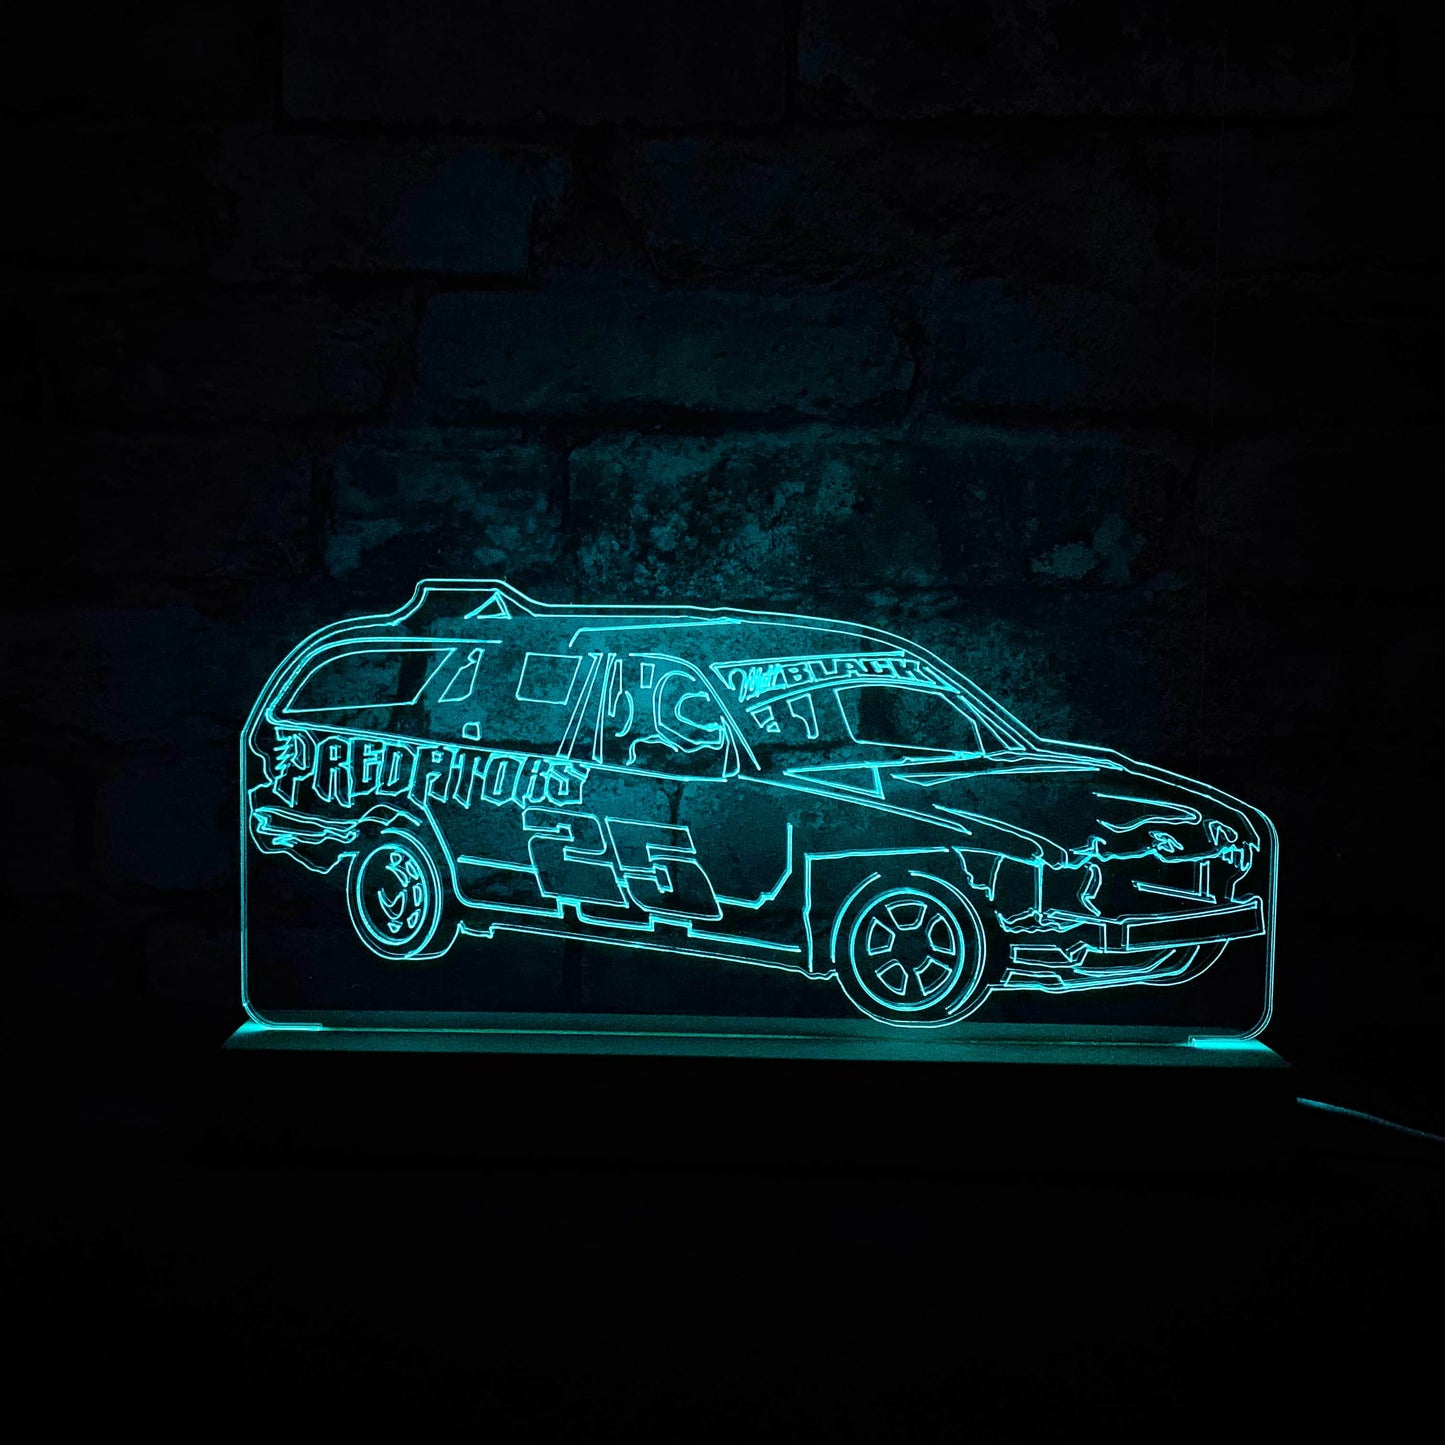 Predators (Matt Black) Banger Night Light - Large Wooden Base - Night Lights & Ambient Lighting - Stock Car & Banger Toy Tracks